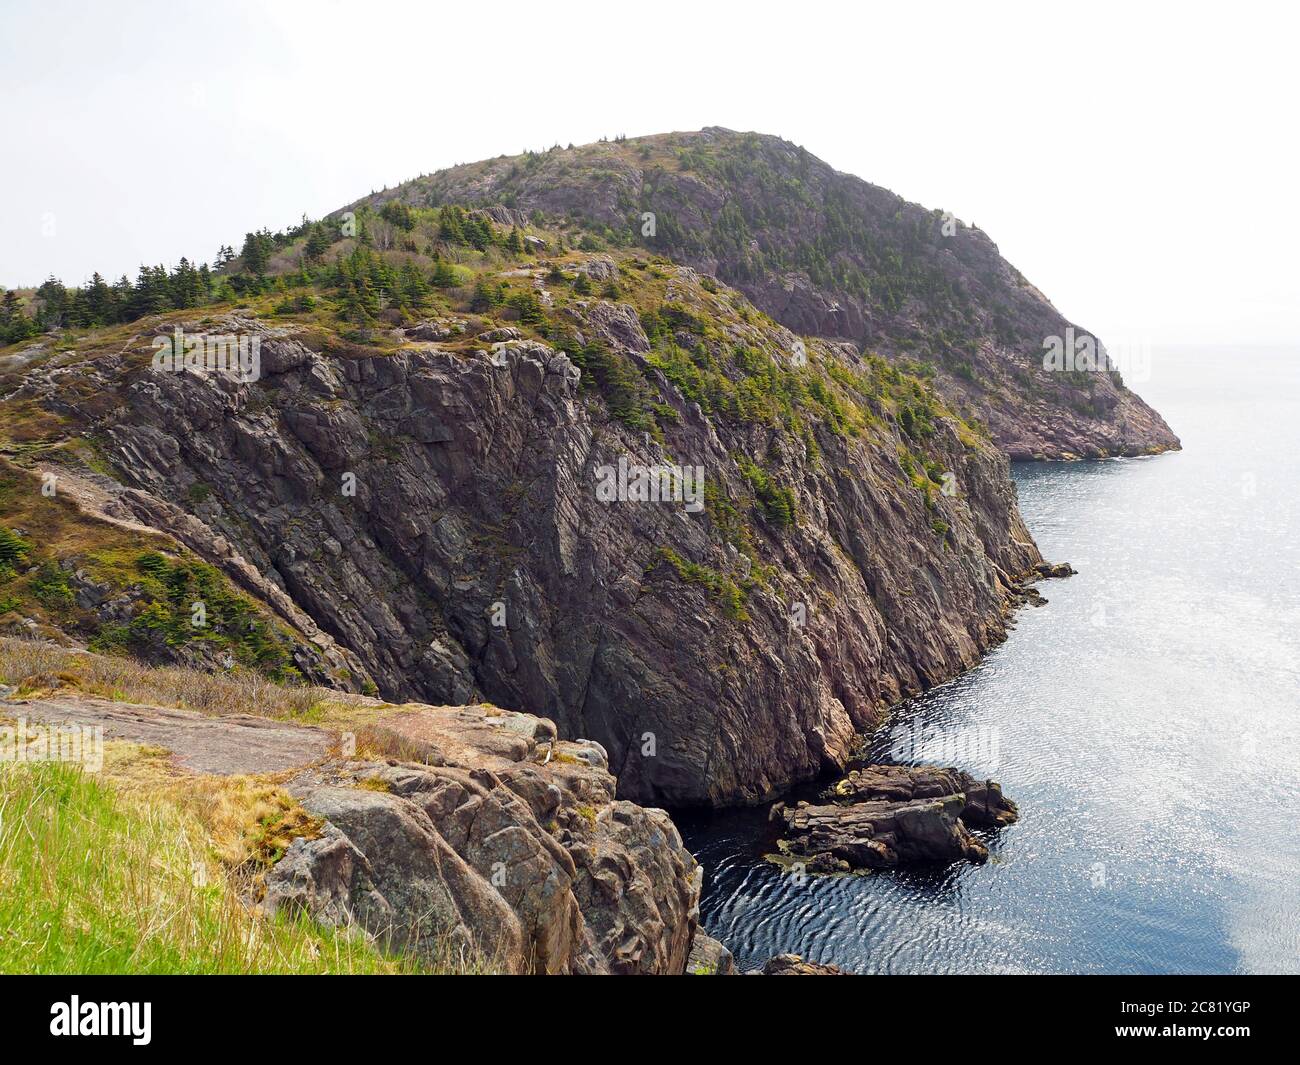 Cuckold’s Cove, Signal Hill Peninsula, St John’s, Newfoundland, Newfoundland and Labrador, Canada Stock Photo